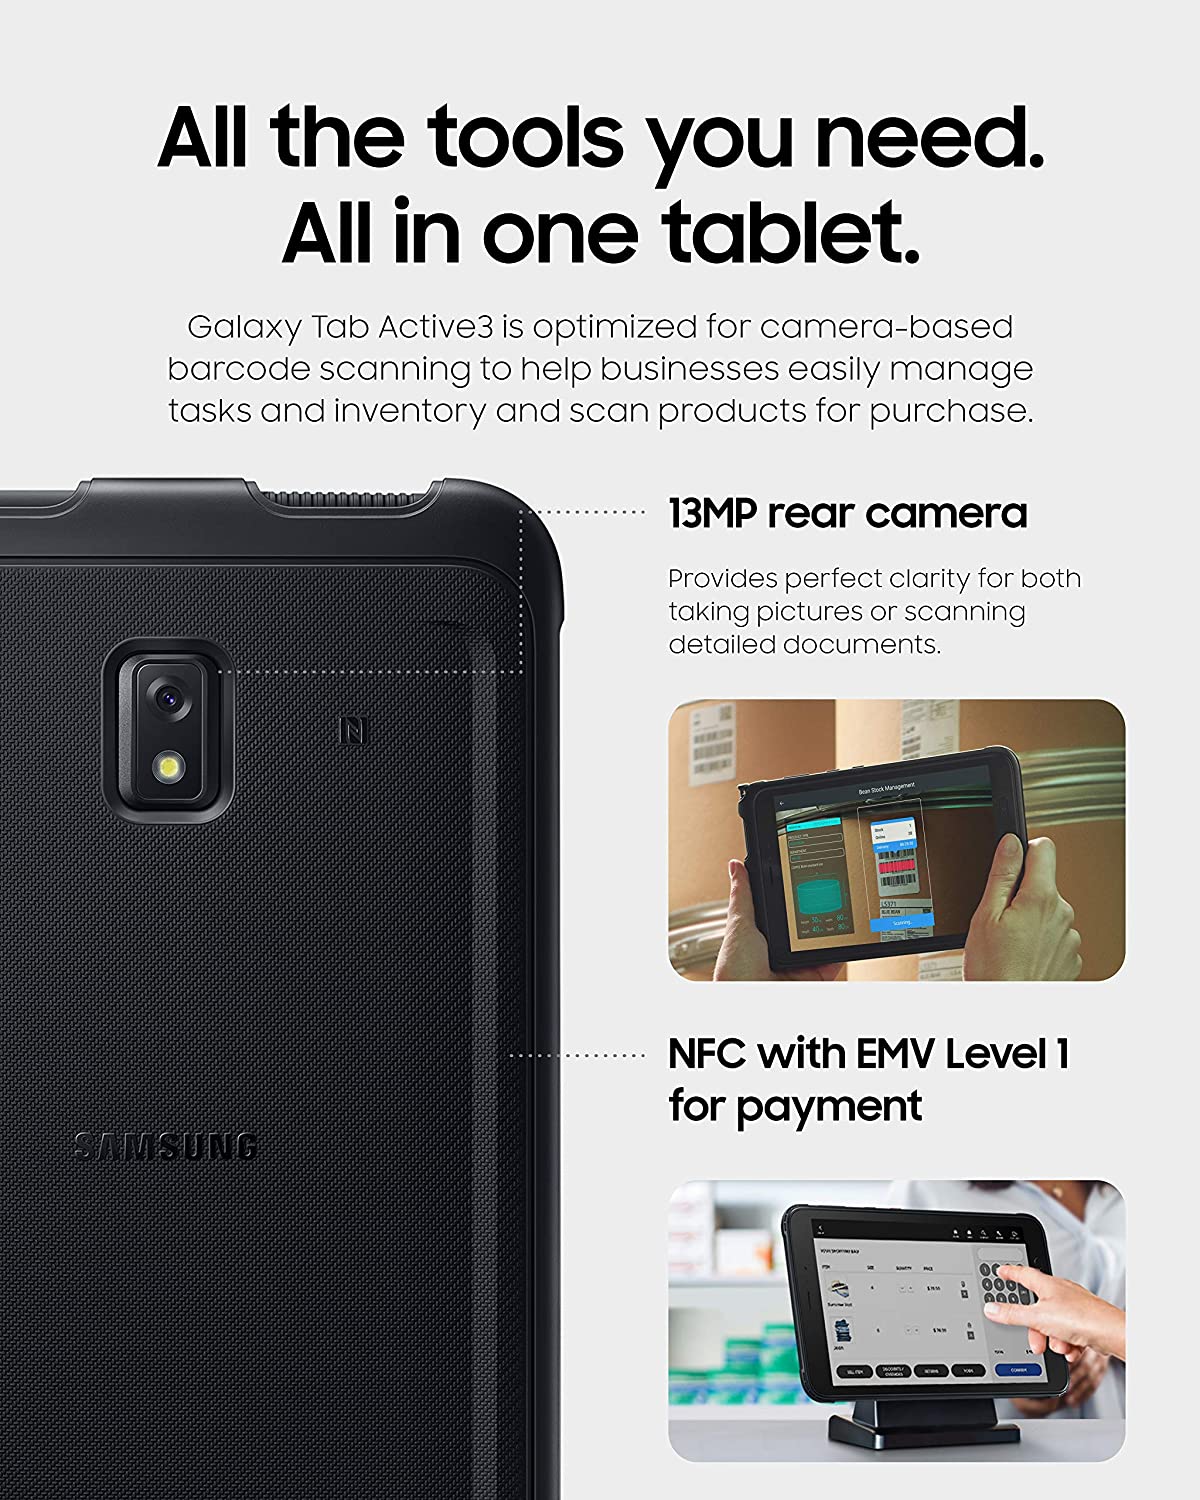 Samsung Galaxy Tab Active 3 features